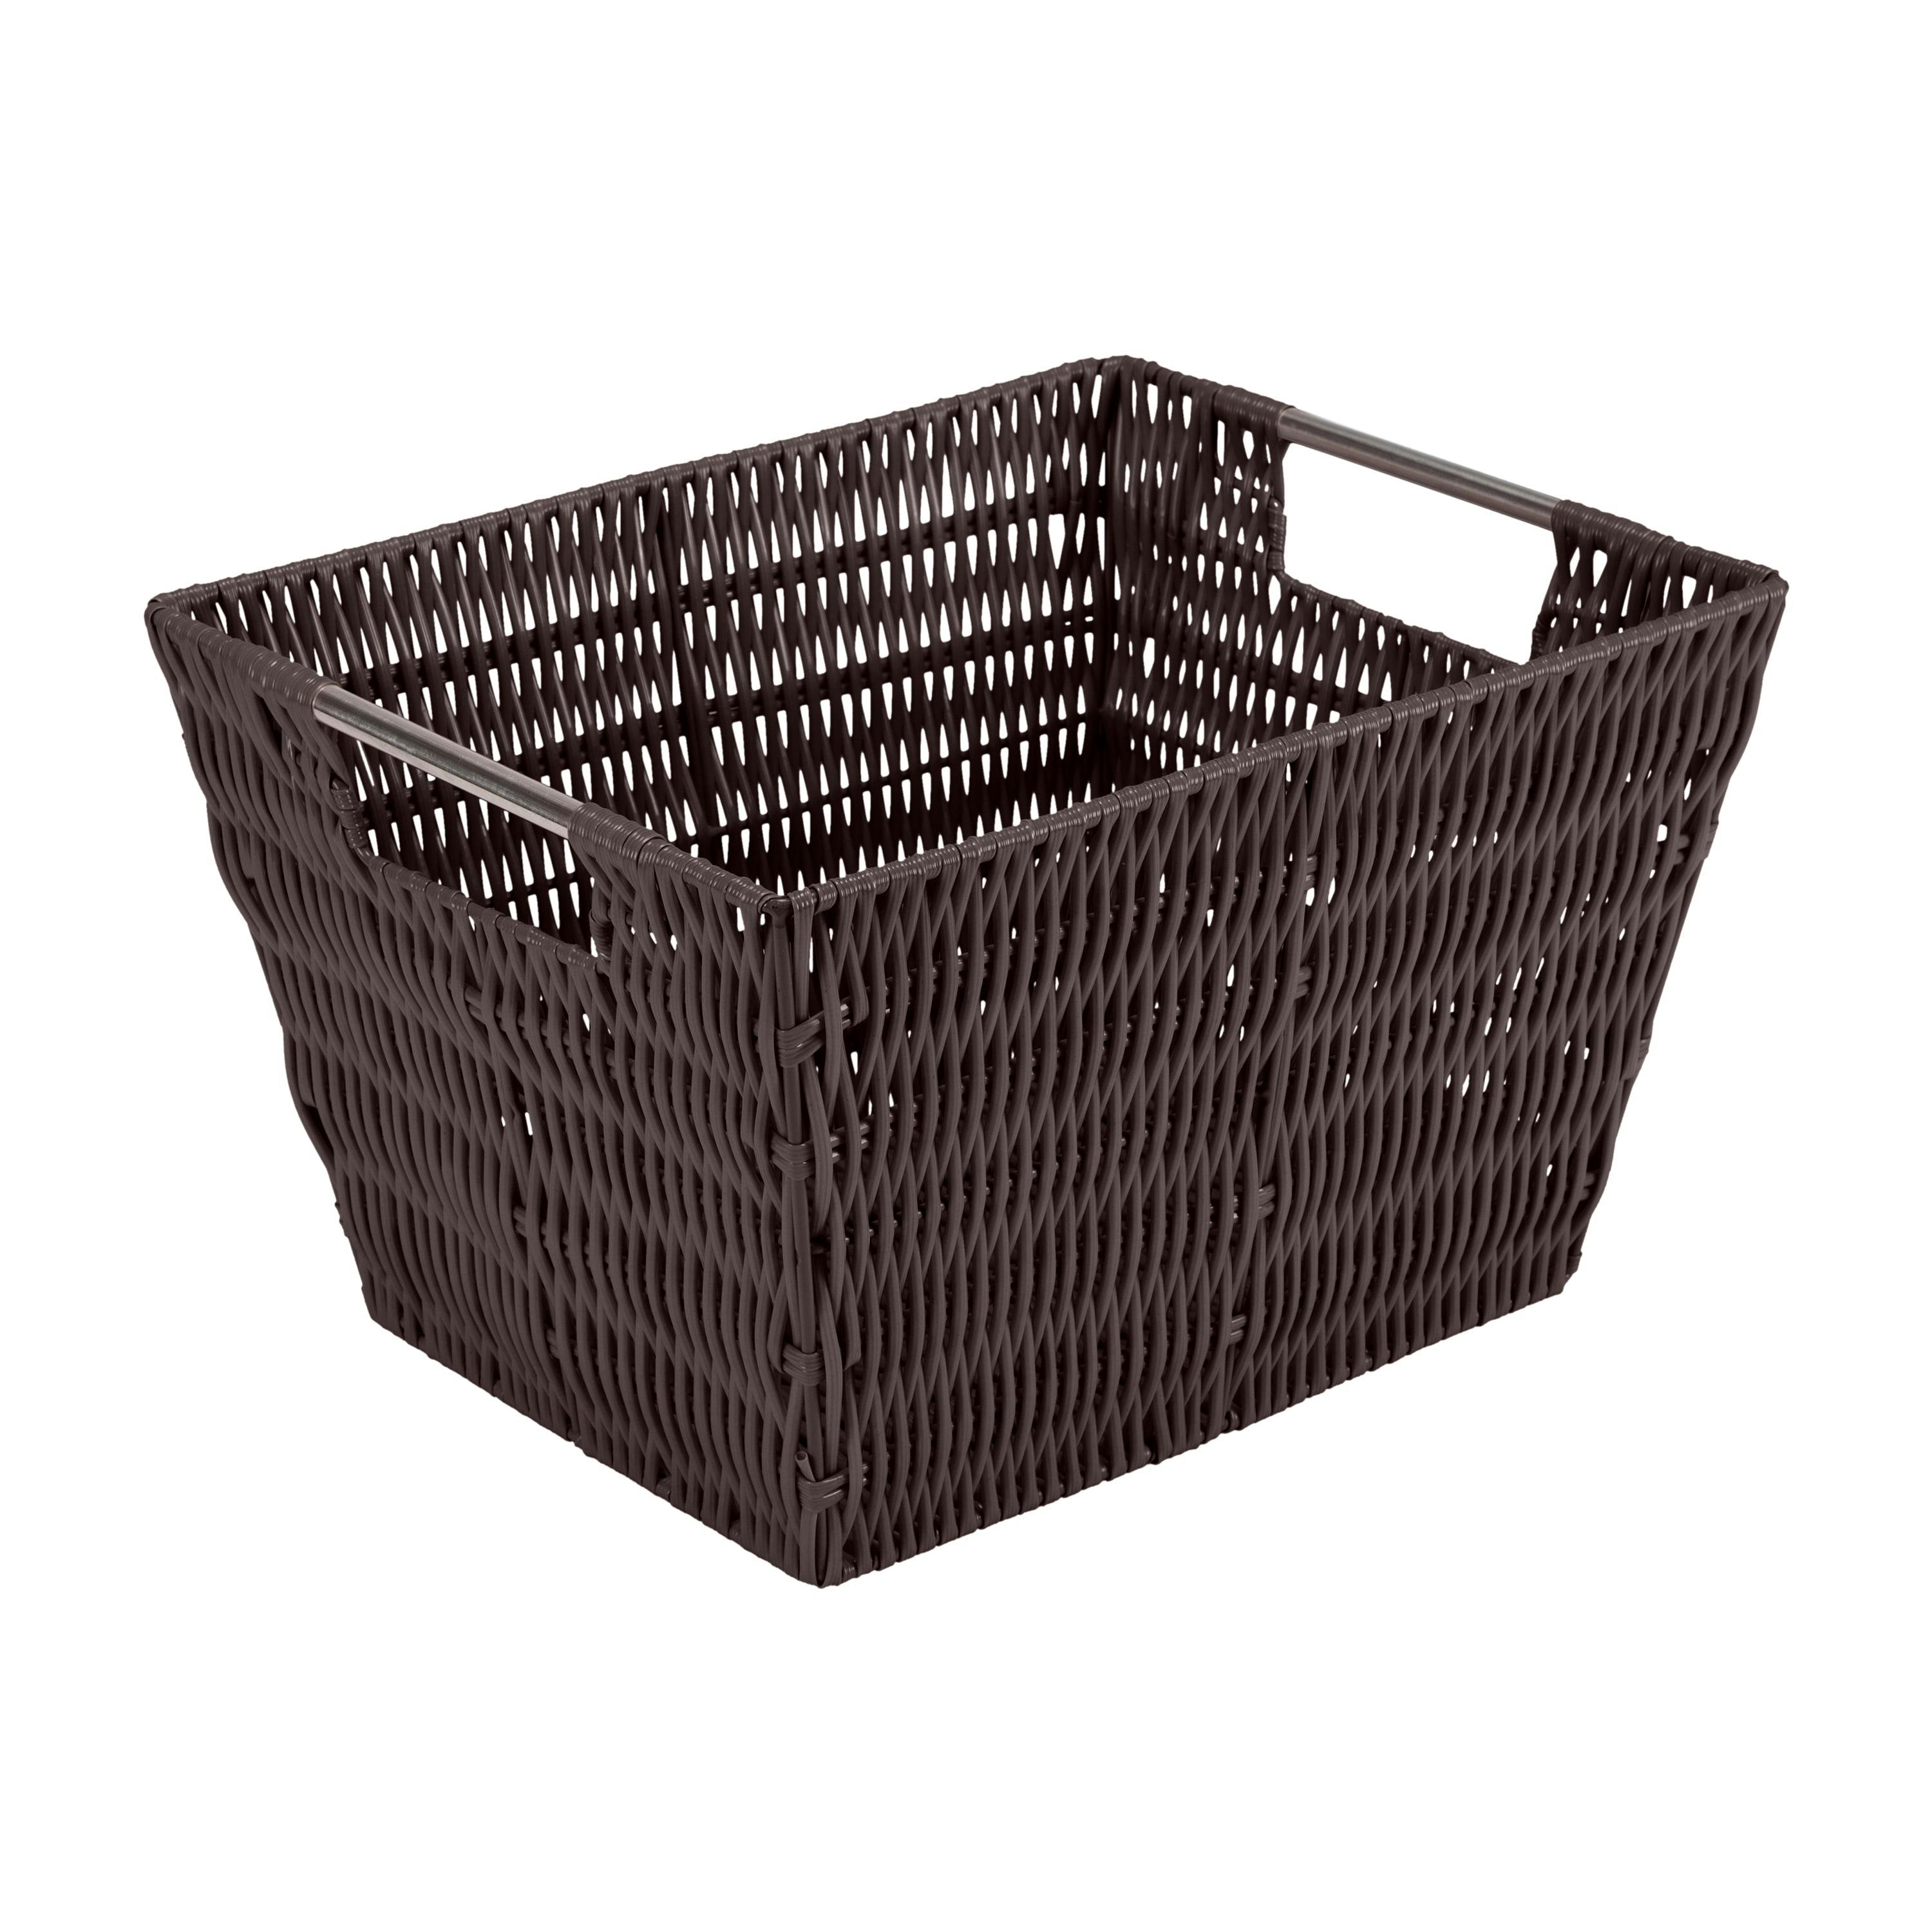 Rectangular Rattan Storage Basket with Stainless Steel Handles - Chocolate